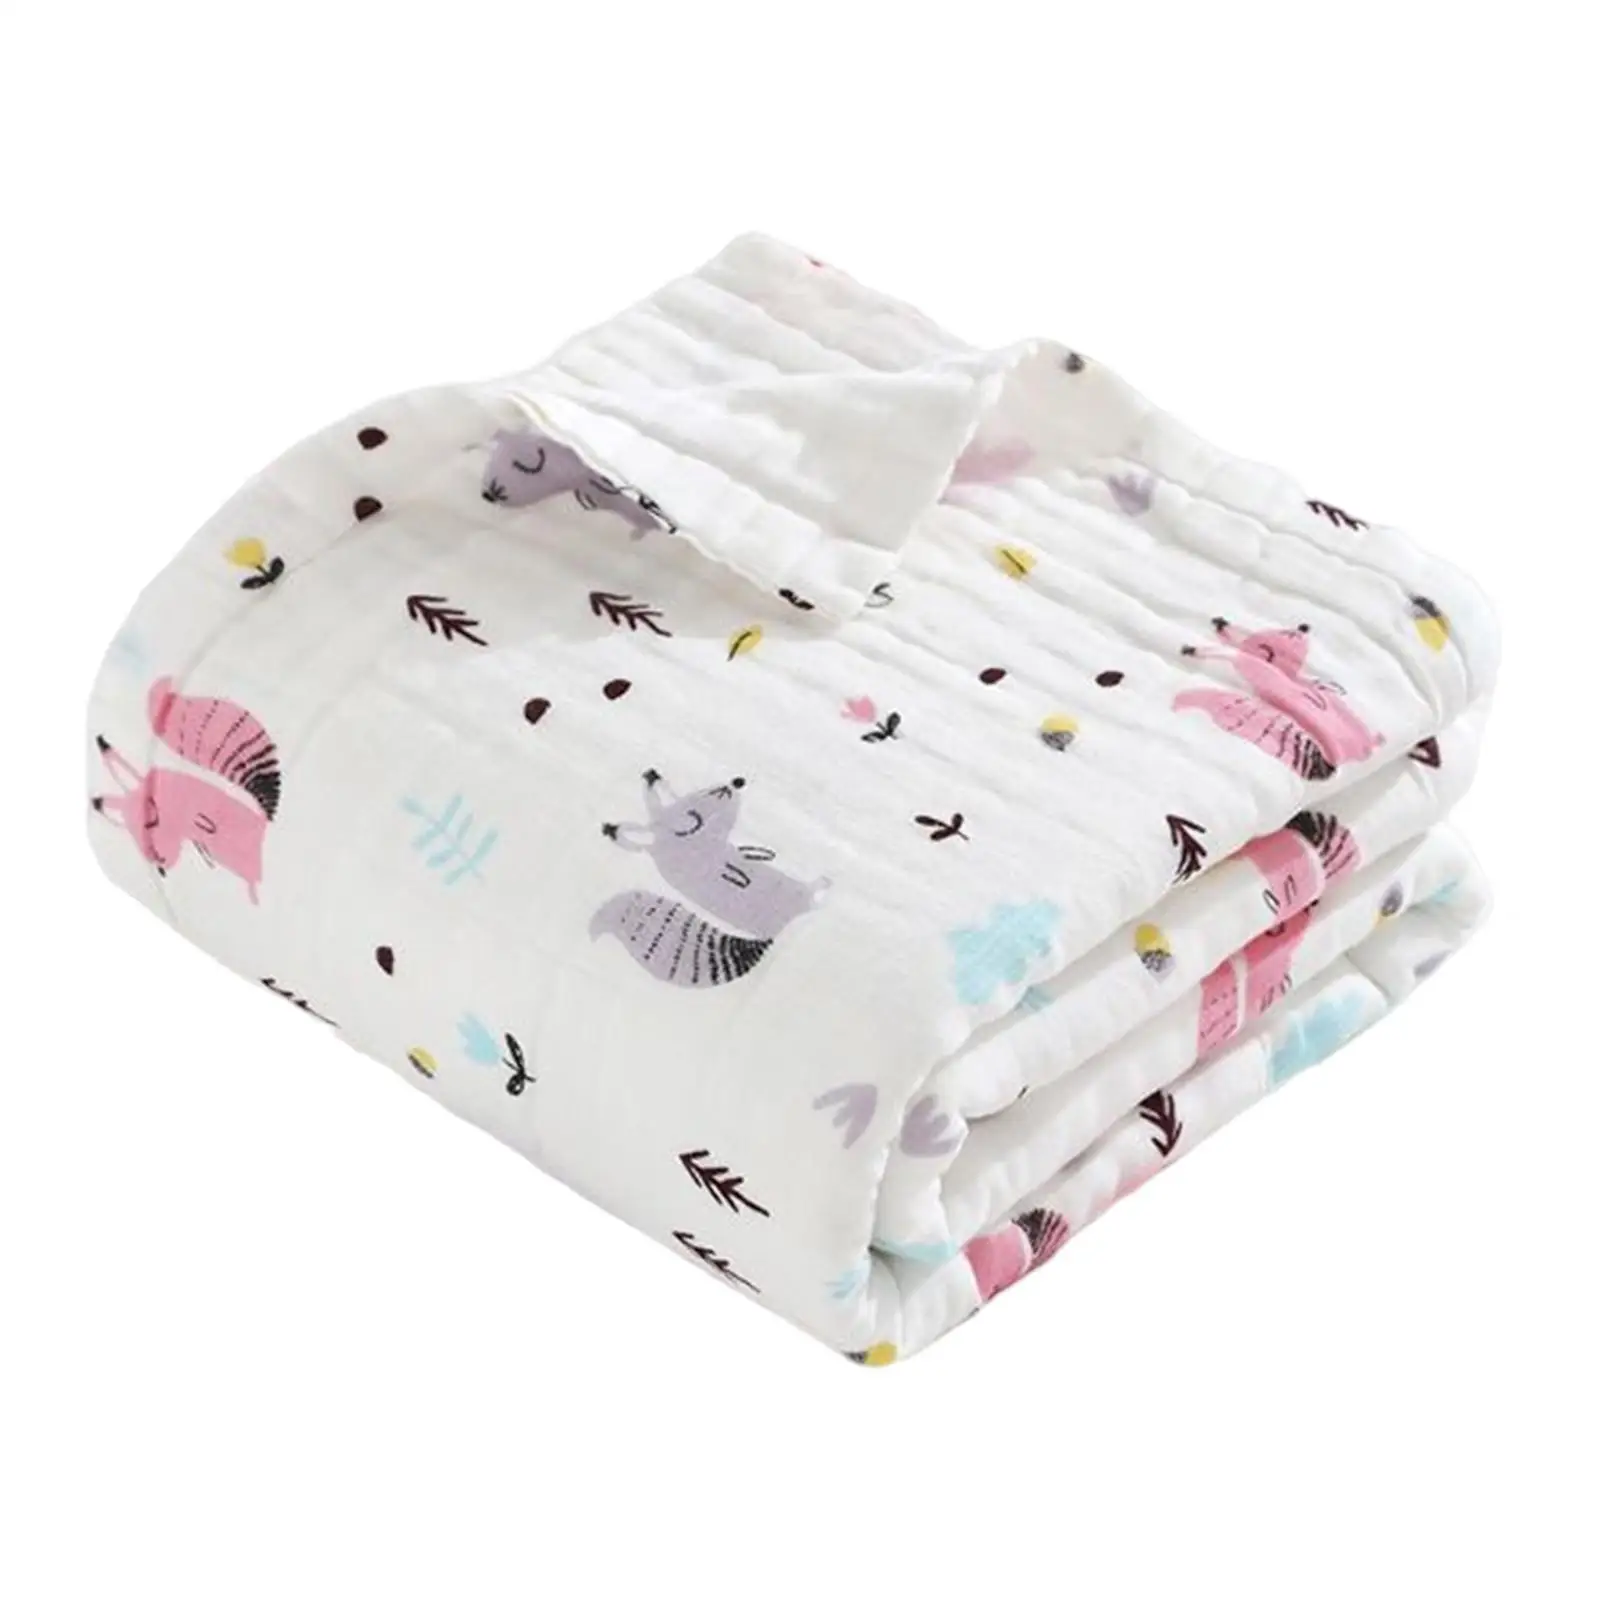 110x110cm bath Towel, Blanket Wrap Thick Cotton Comfortable Wash Cloth Bath Sheet Swaddling for Toddler Newborns Kids